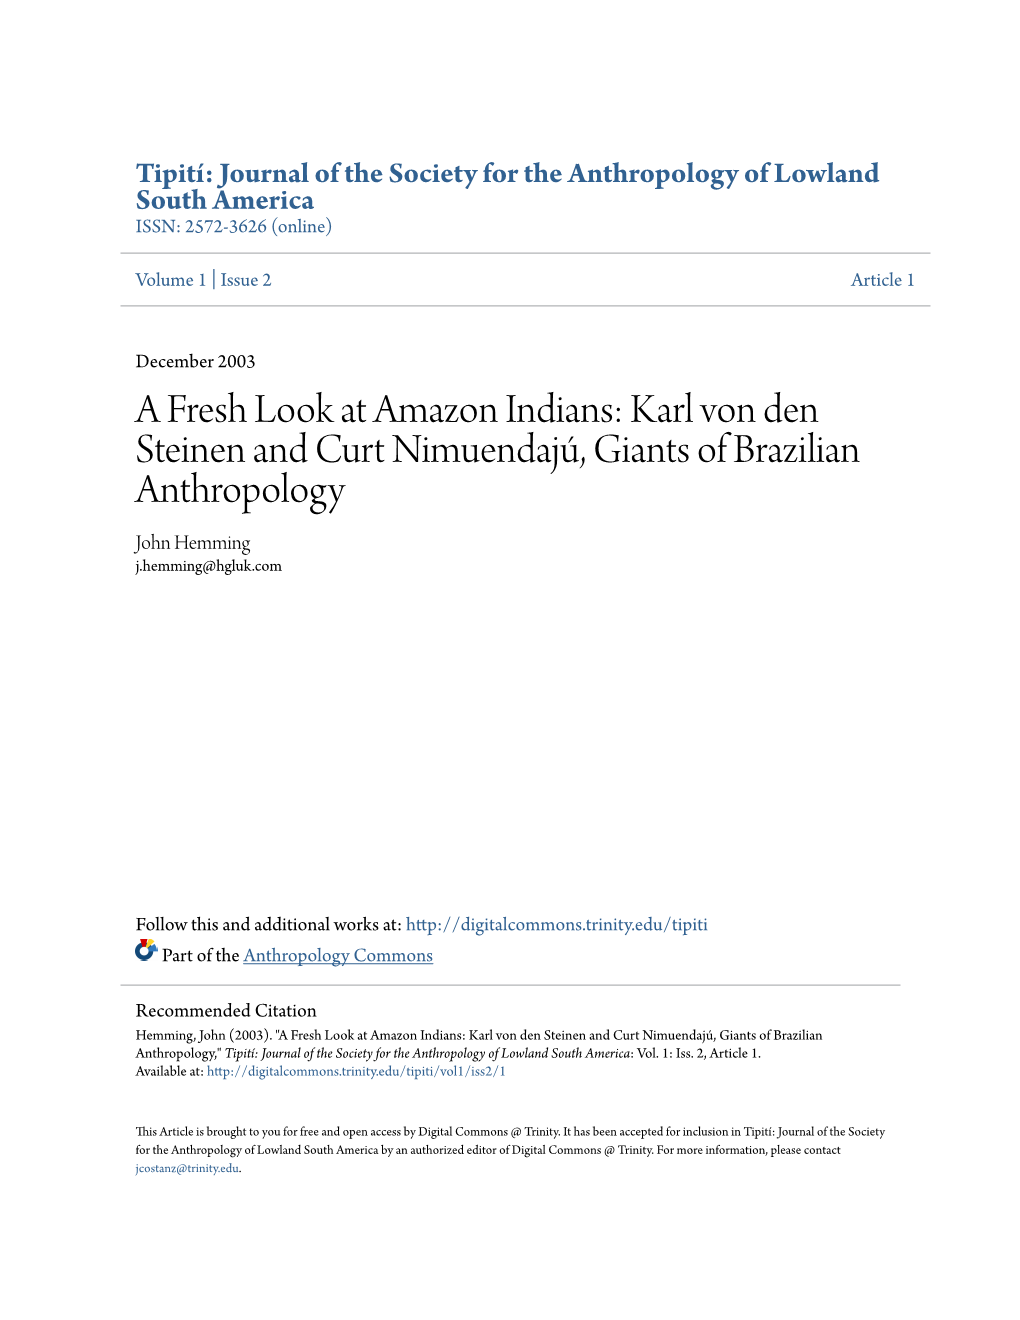 A Fresh Look at Amazon Indians: Karl Von Den Steinen and Curt Nimuendajú, Giants of Brazilian Anthropology John Hemming J.Hemming@Hgluk.Com